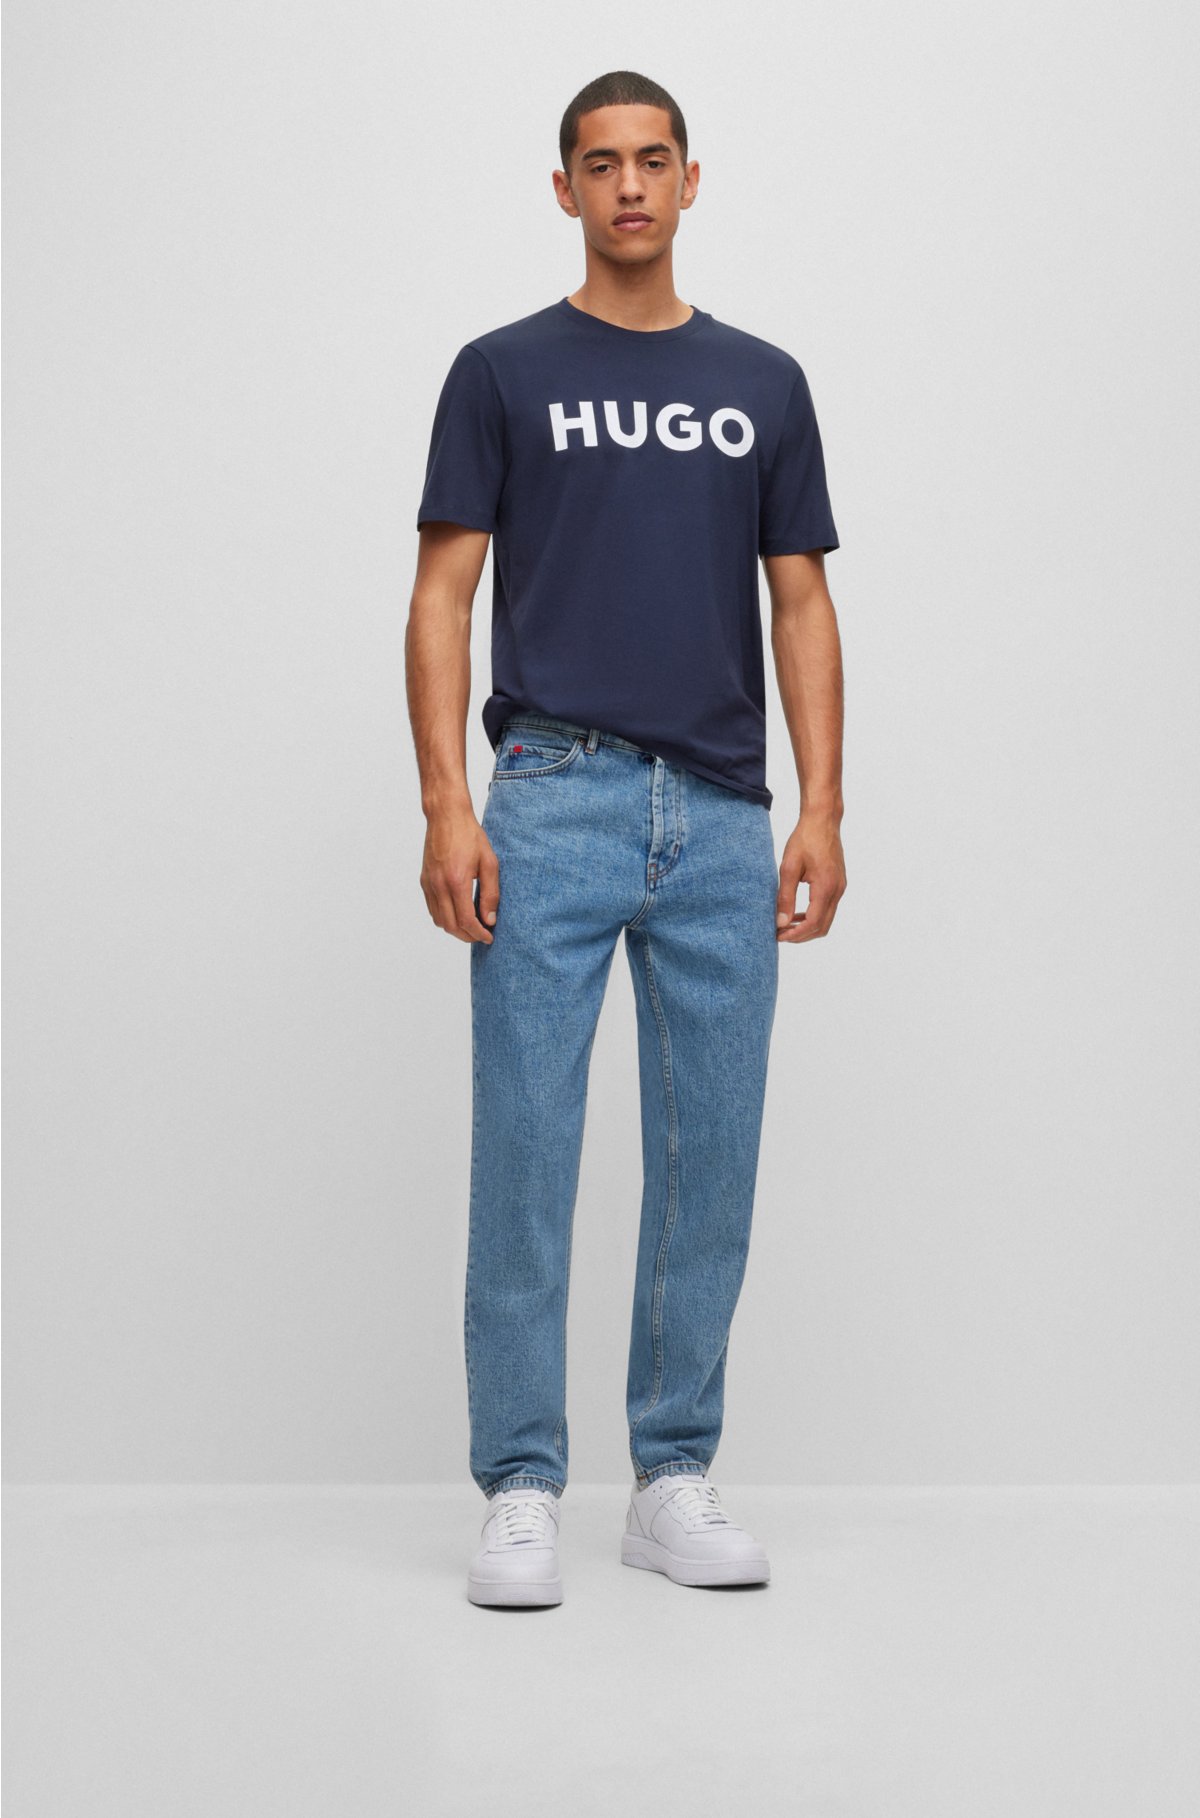 EIGHTYFIVE LOGO PRINT - Relaxed fit jeans - dark blue/dark-blue